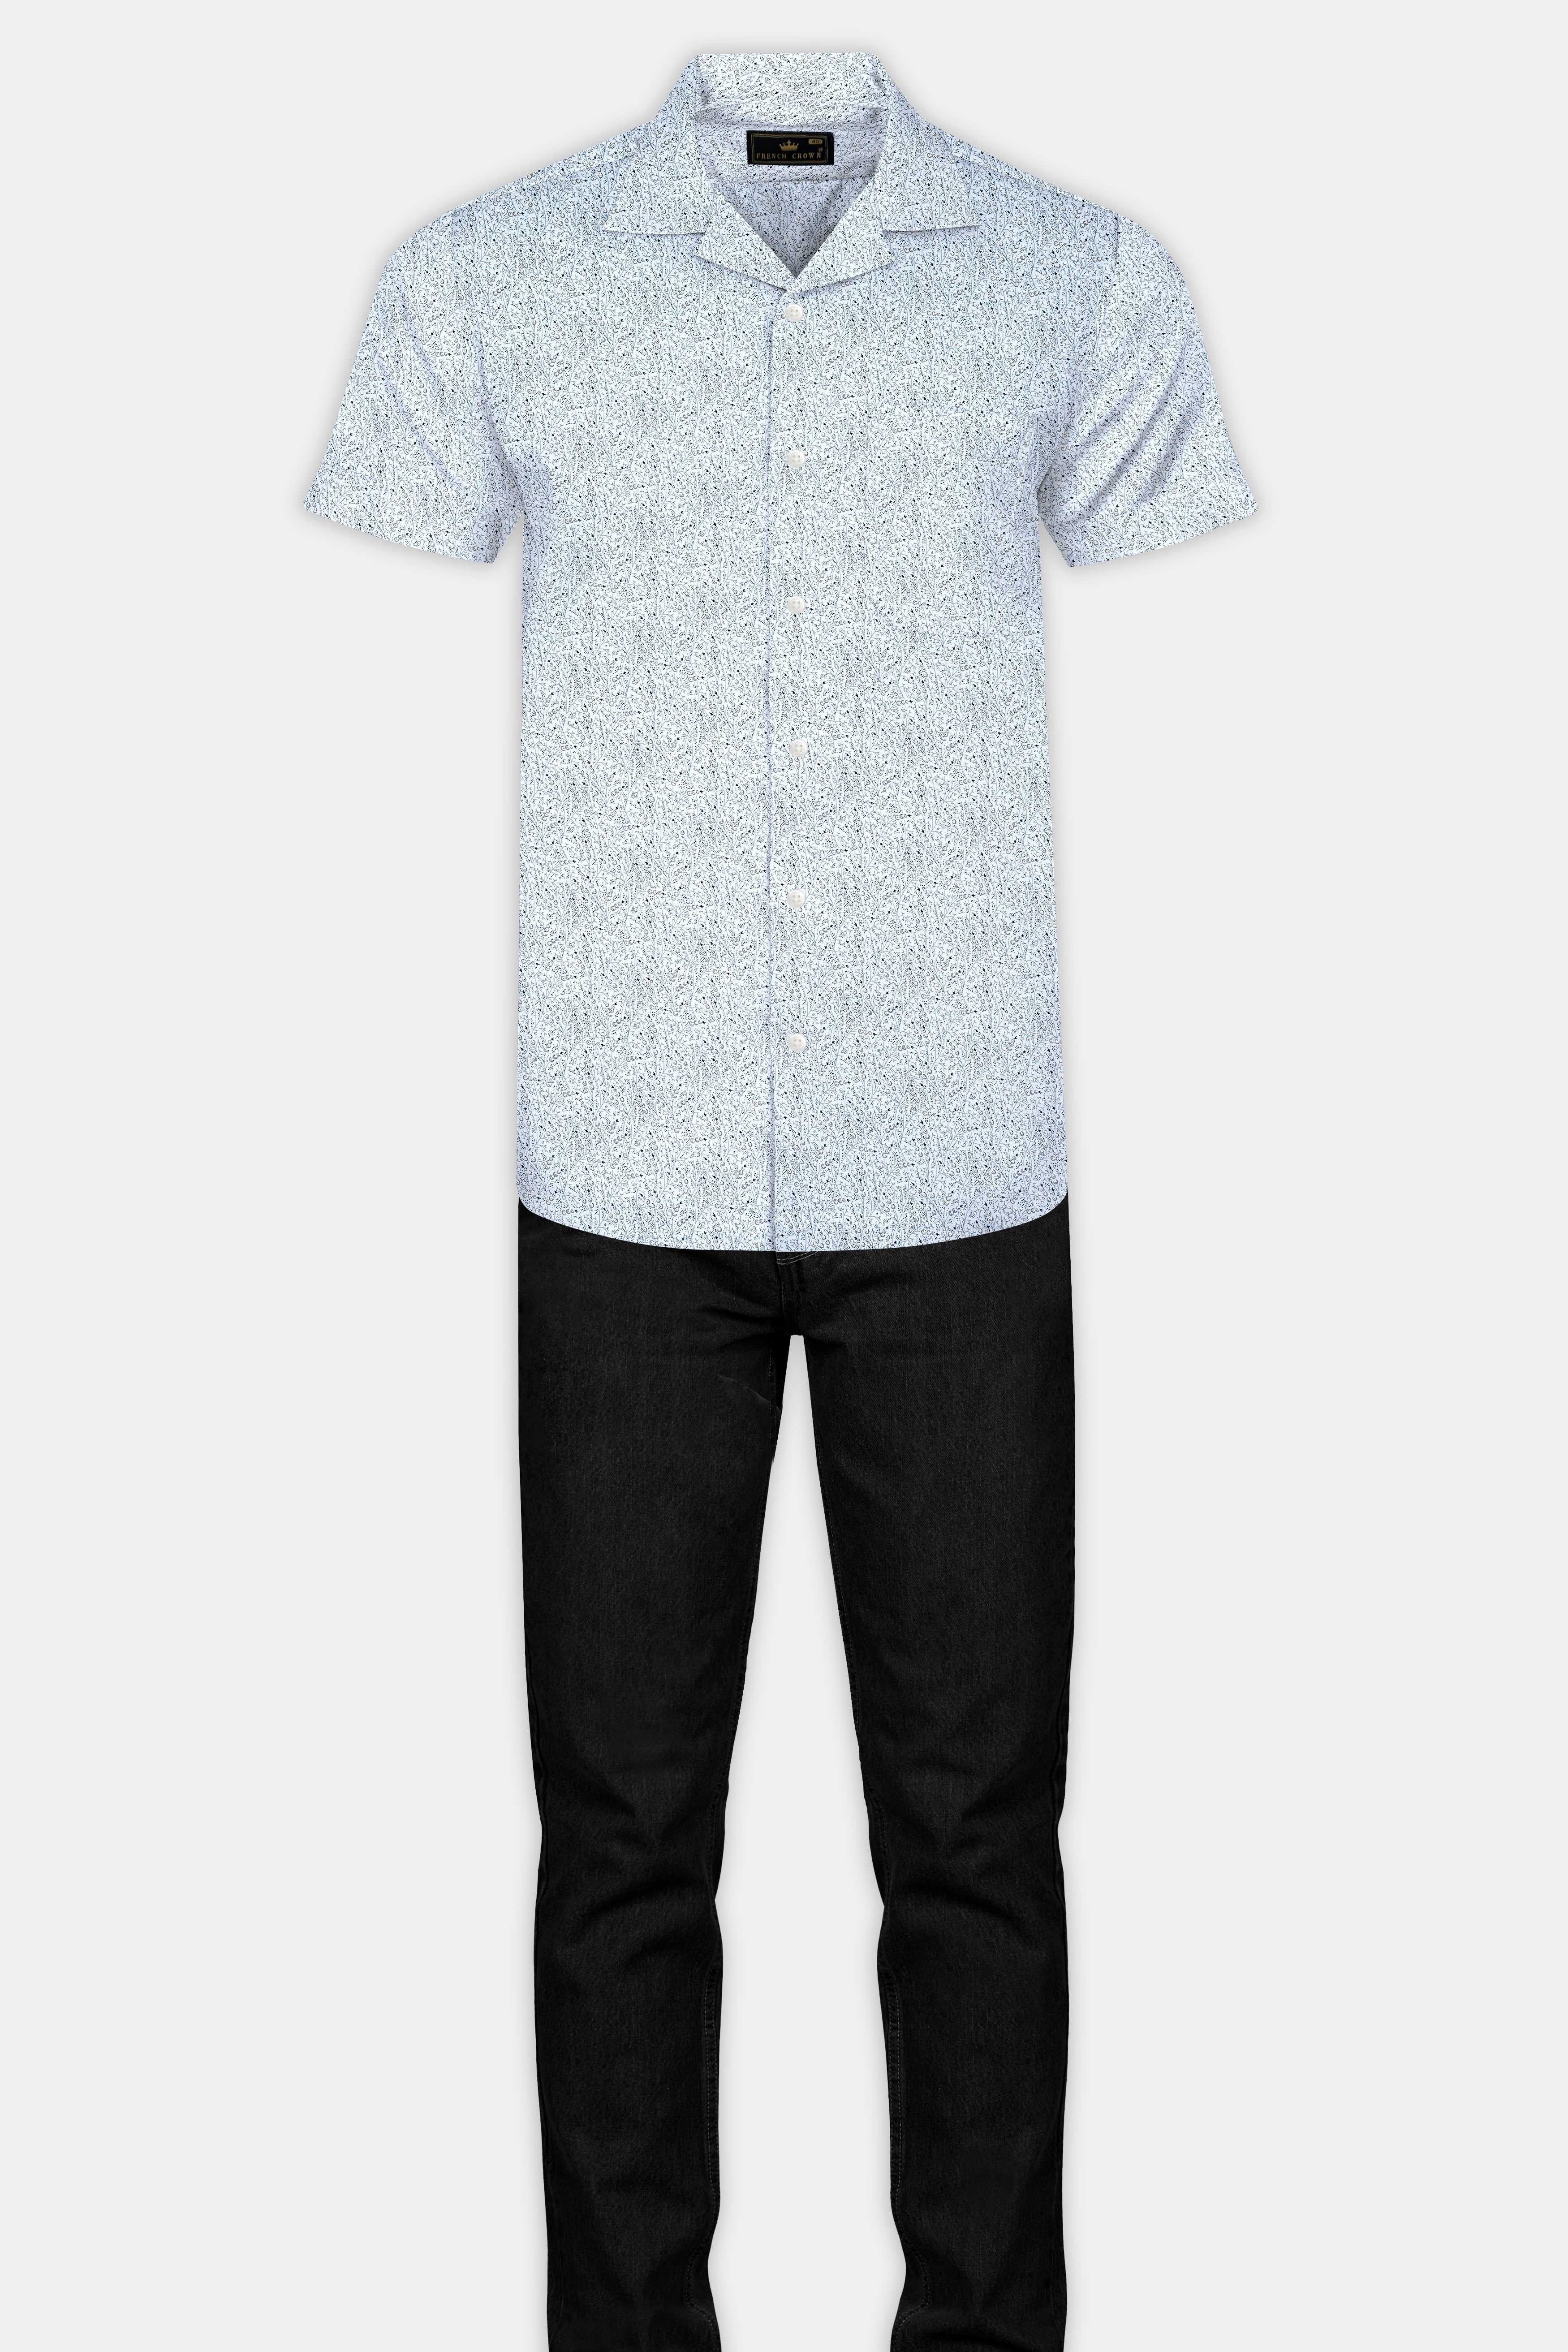 Bright White and Nile Blue Printed Royal Oxford Shirt